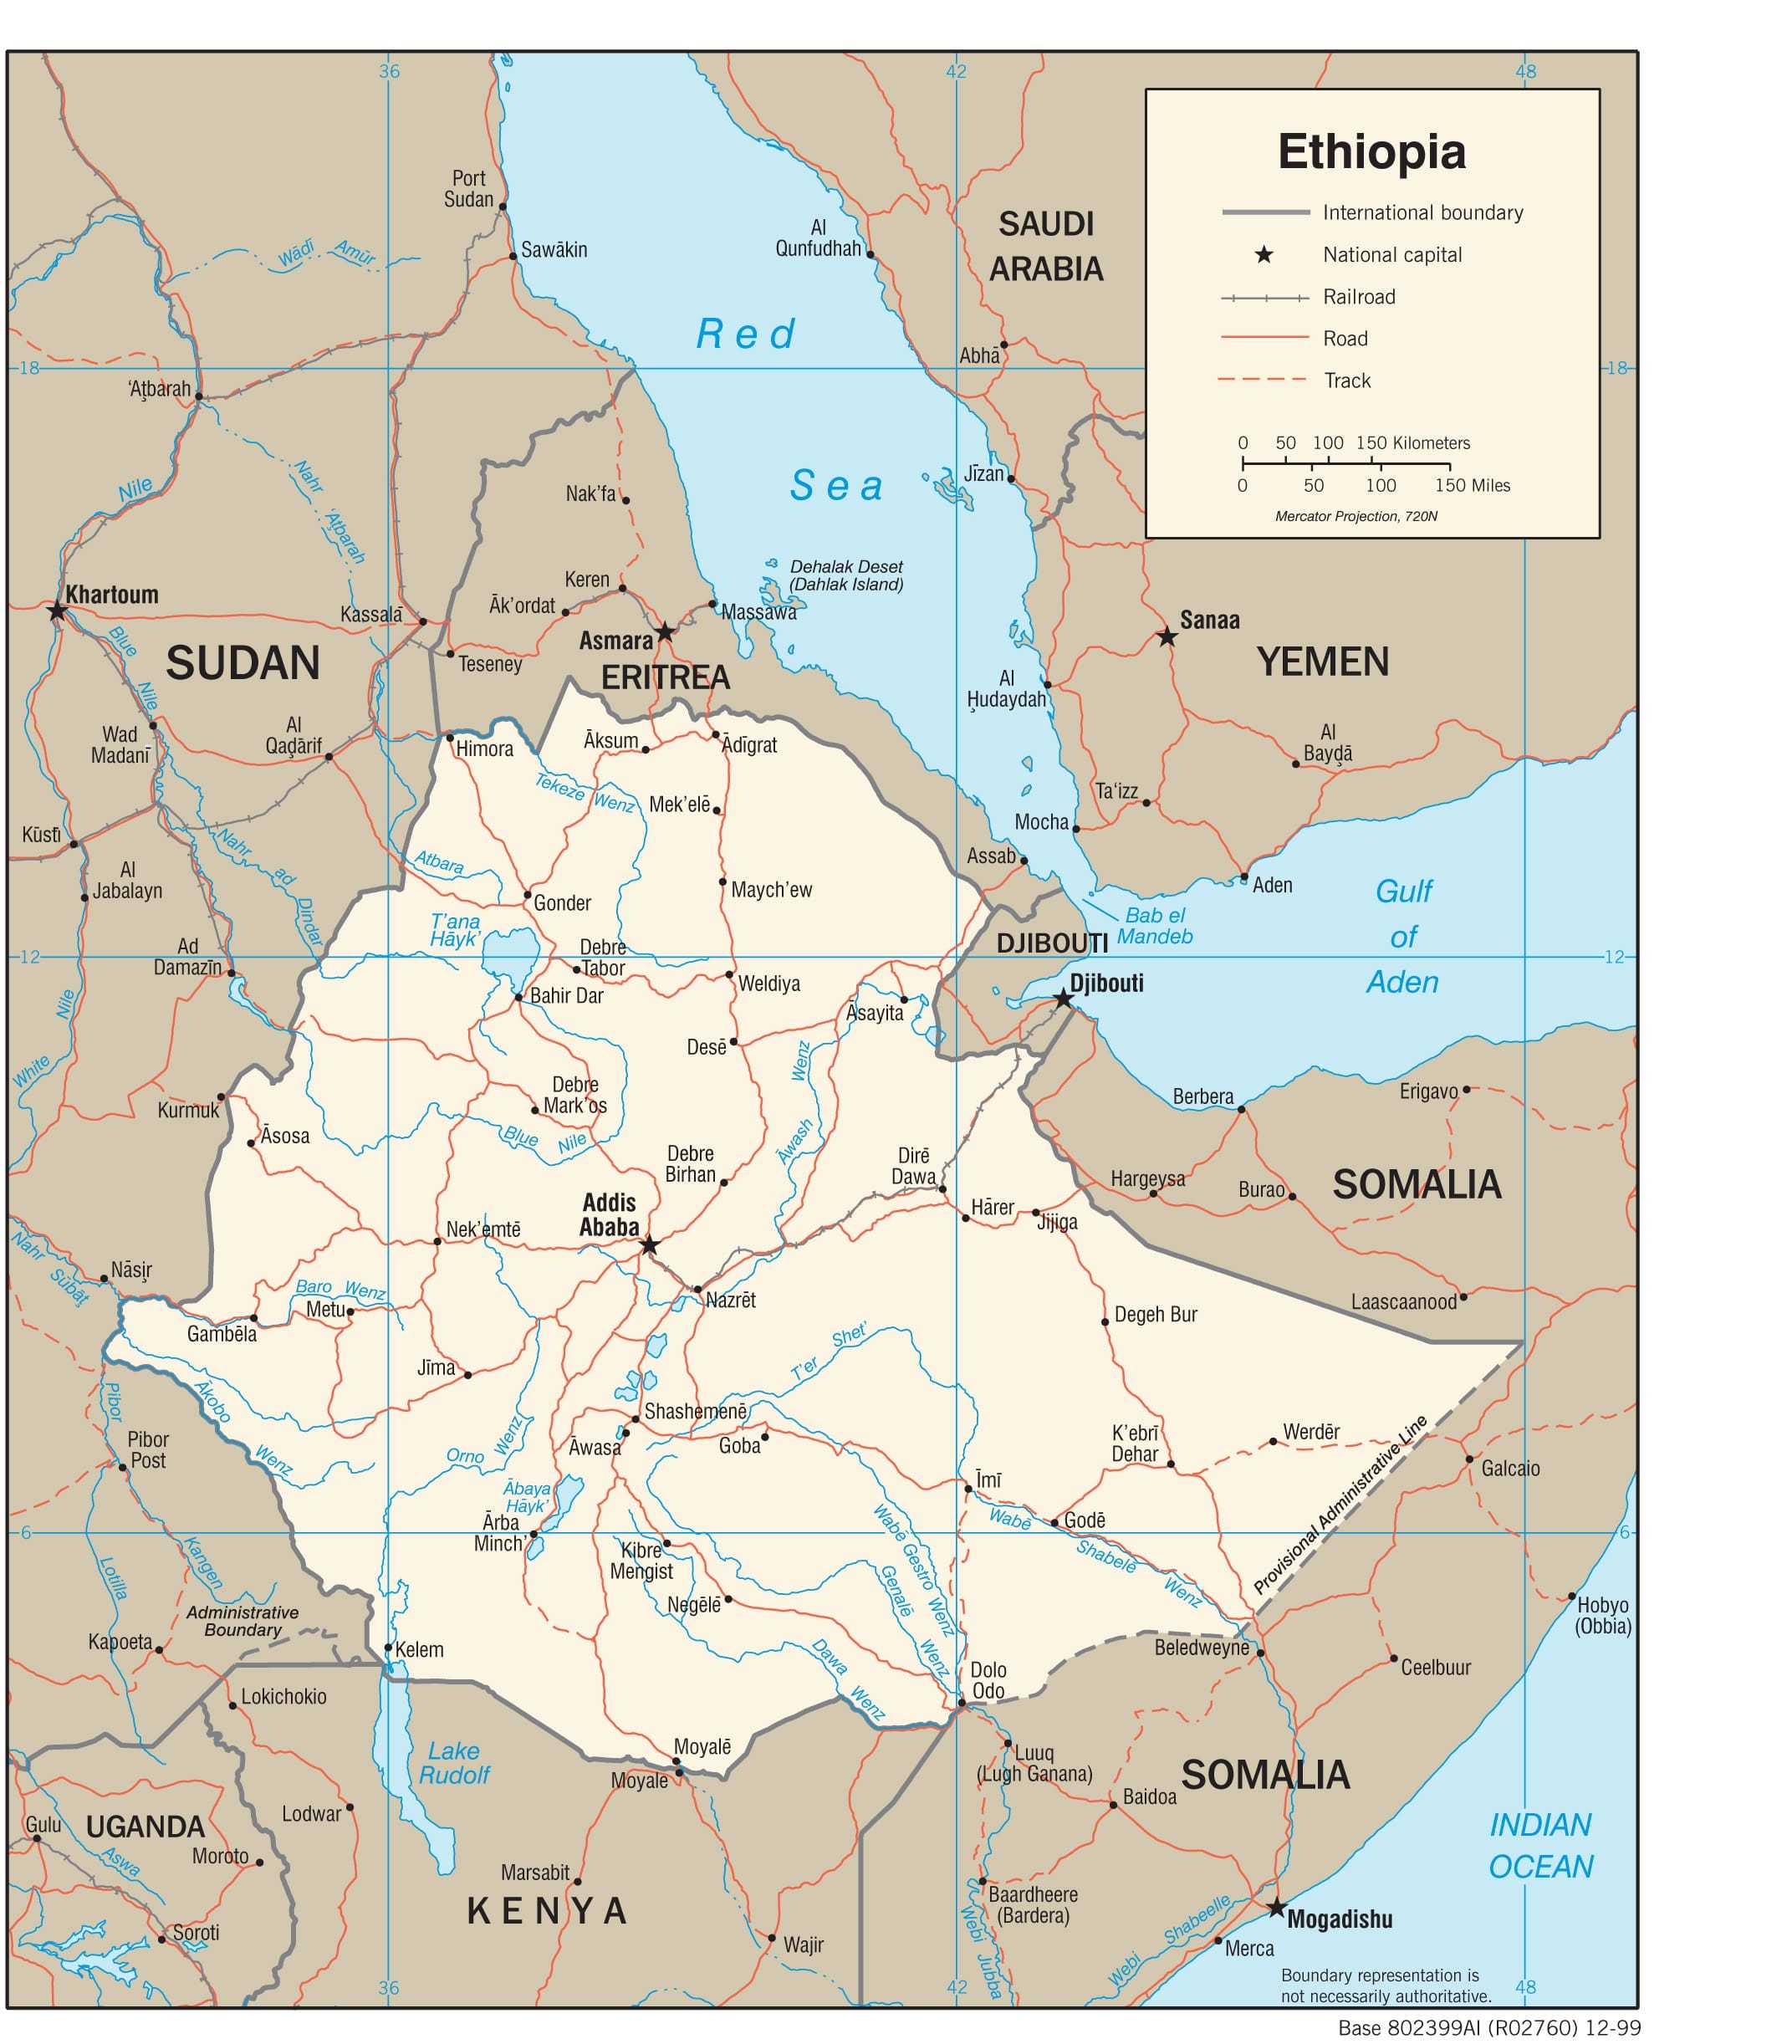 Transportation map of Ethiopia.